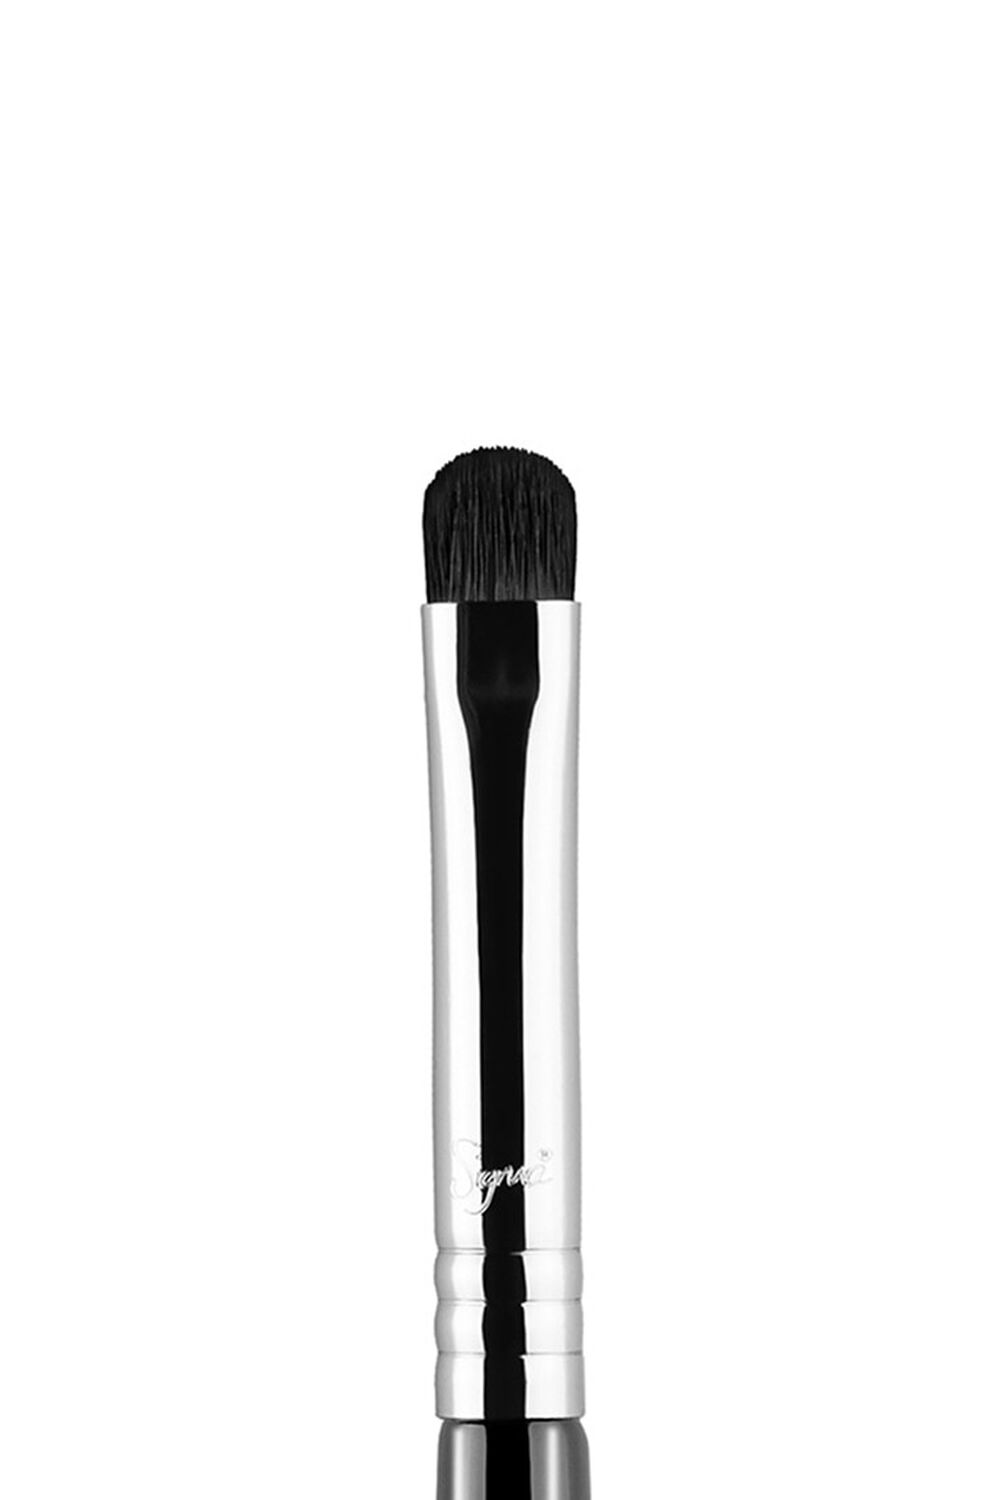 Sigma Beauty E21 – Smudge Brush, image 2